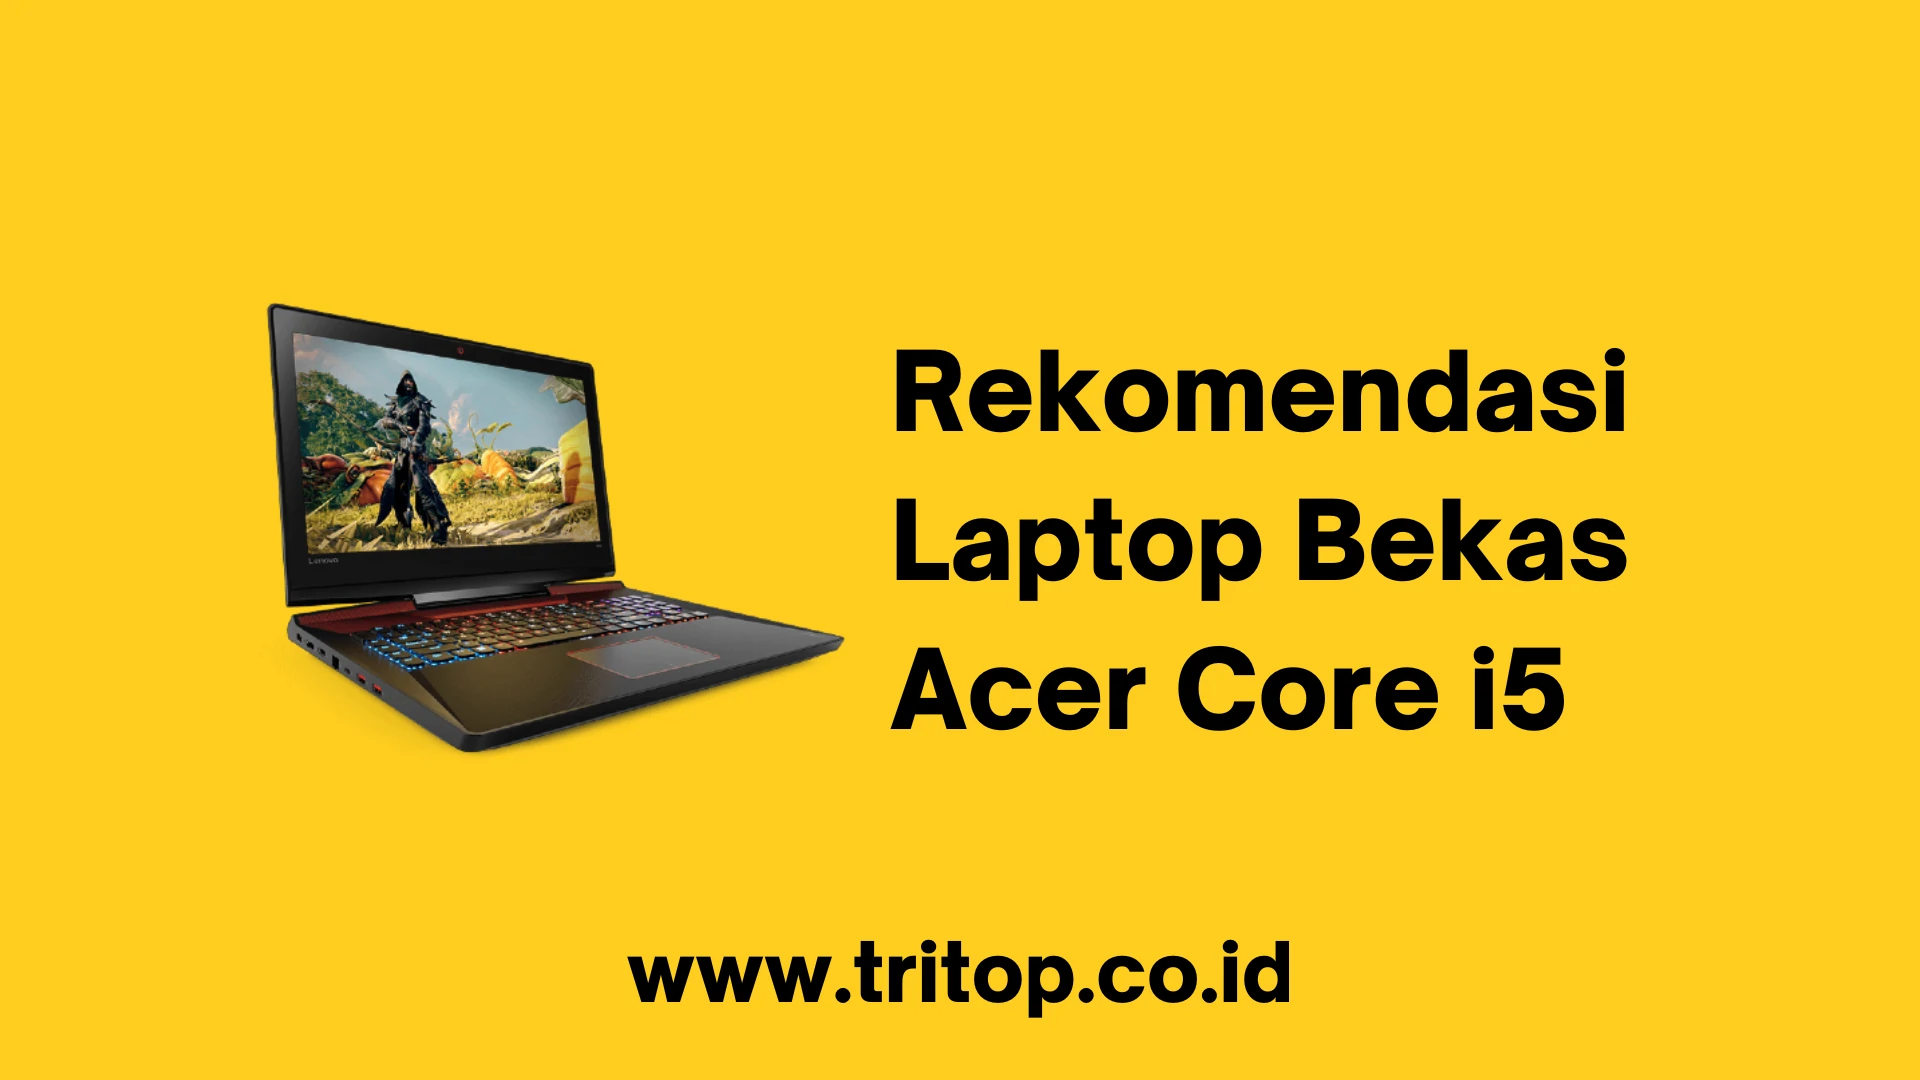 Laptop Bekas Acer Core i5